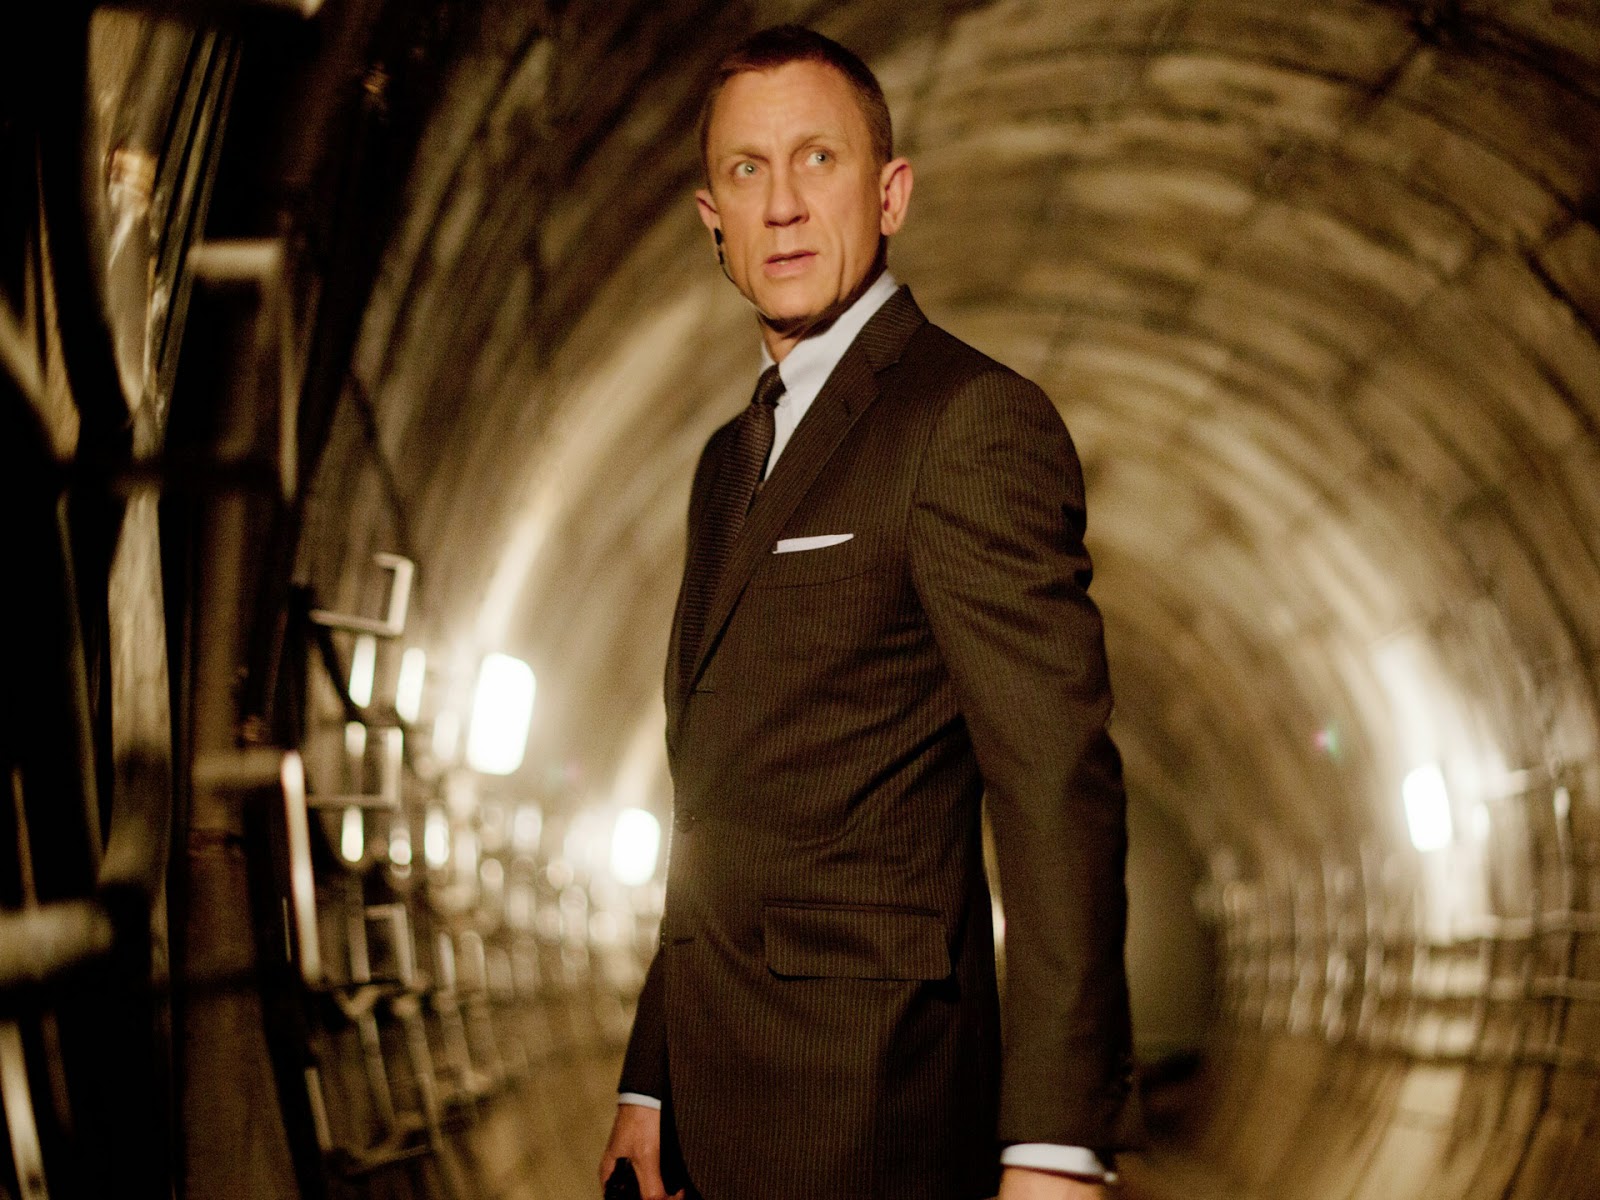 [44+] James Bond Spectre HD Wallpapers | WallpaperSafari